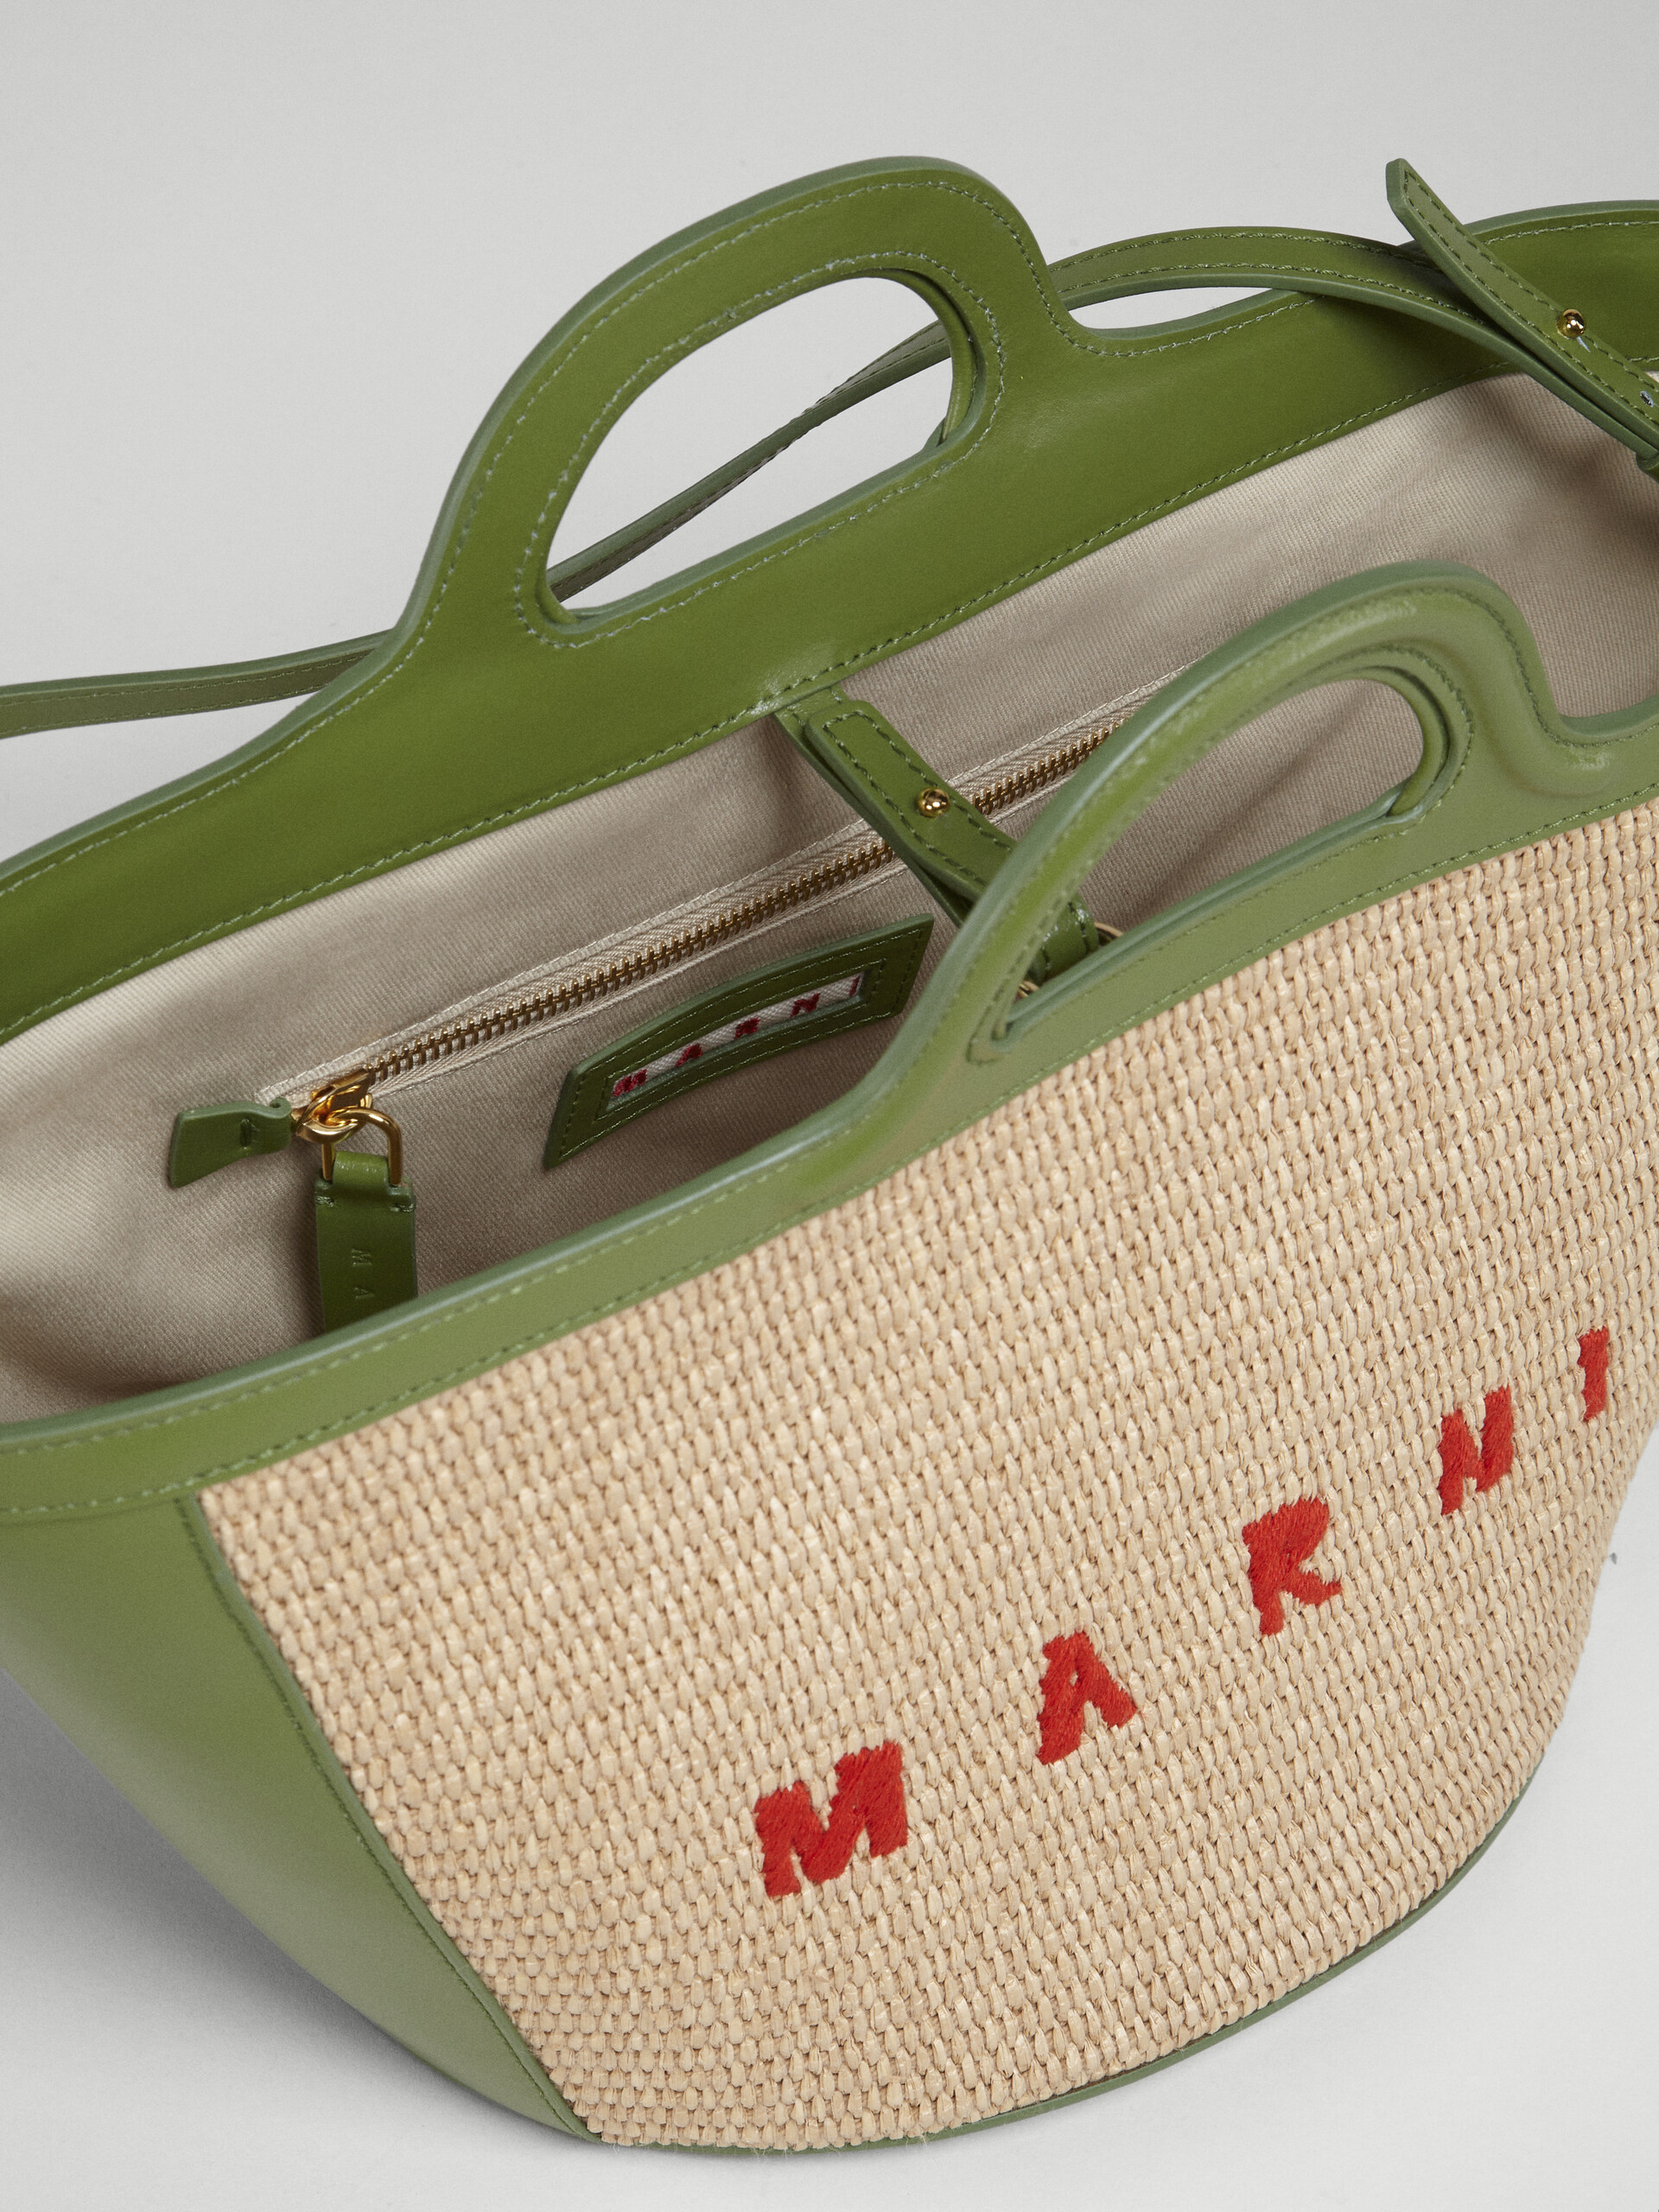 TROPICALIA small bag in green leather and raffia - Handbag - Image 4